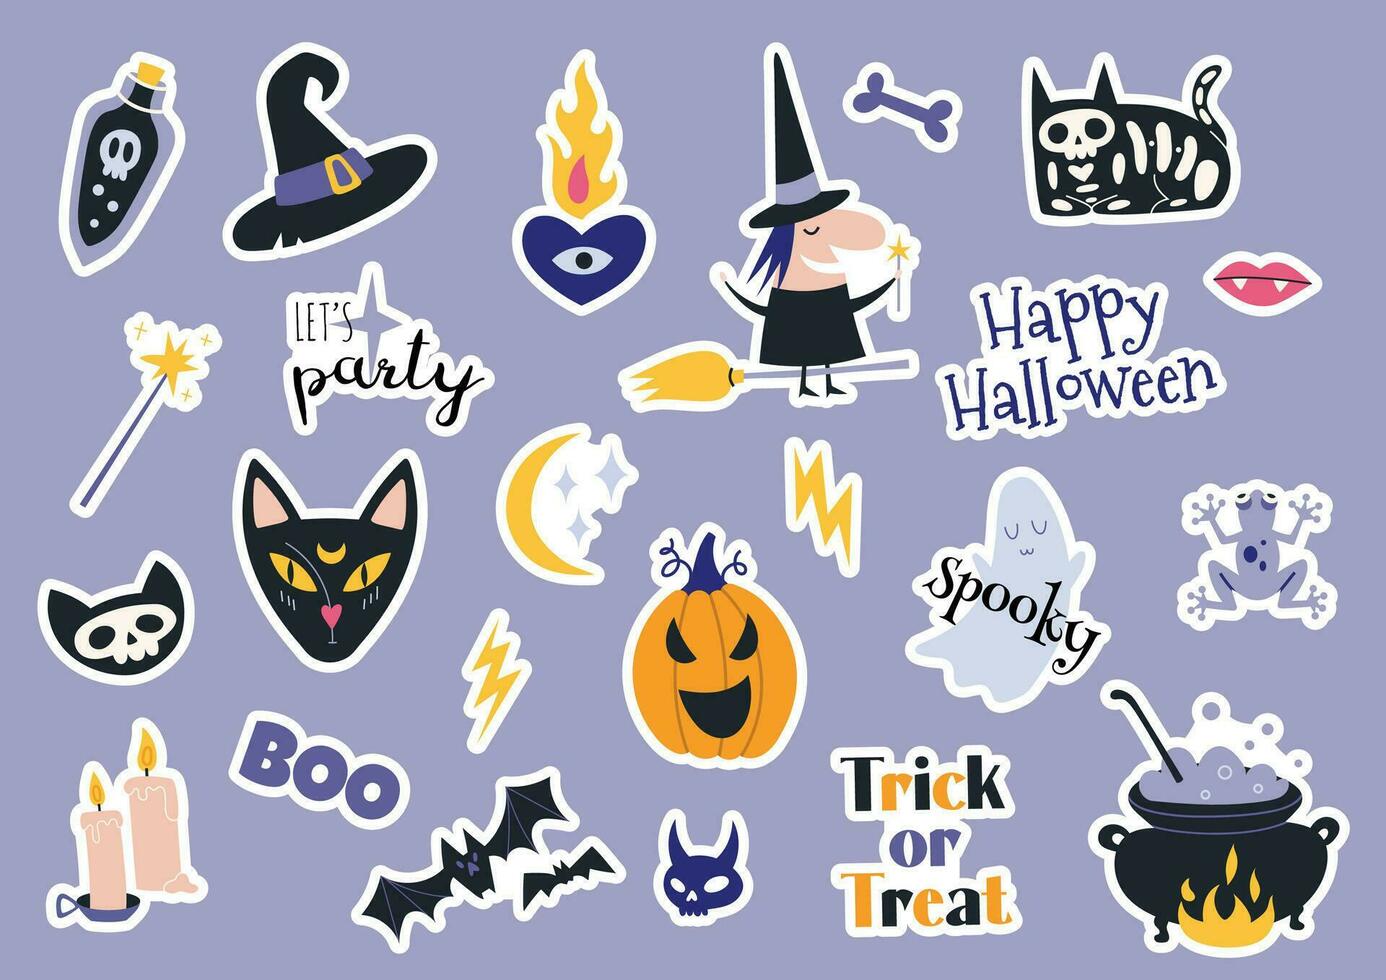 Happy Halloween stickerpack with pumpkins, bat, decoration elements. Bohemian mystical magic collection clip art. Sticker Style. Trendy modern vector illustration, hand drawn, flat